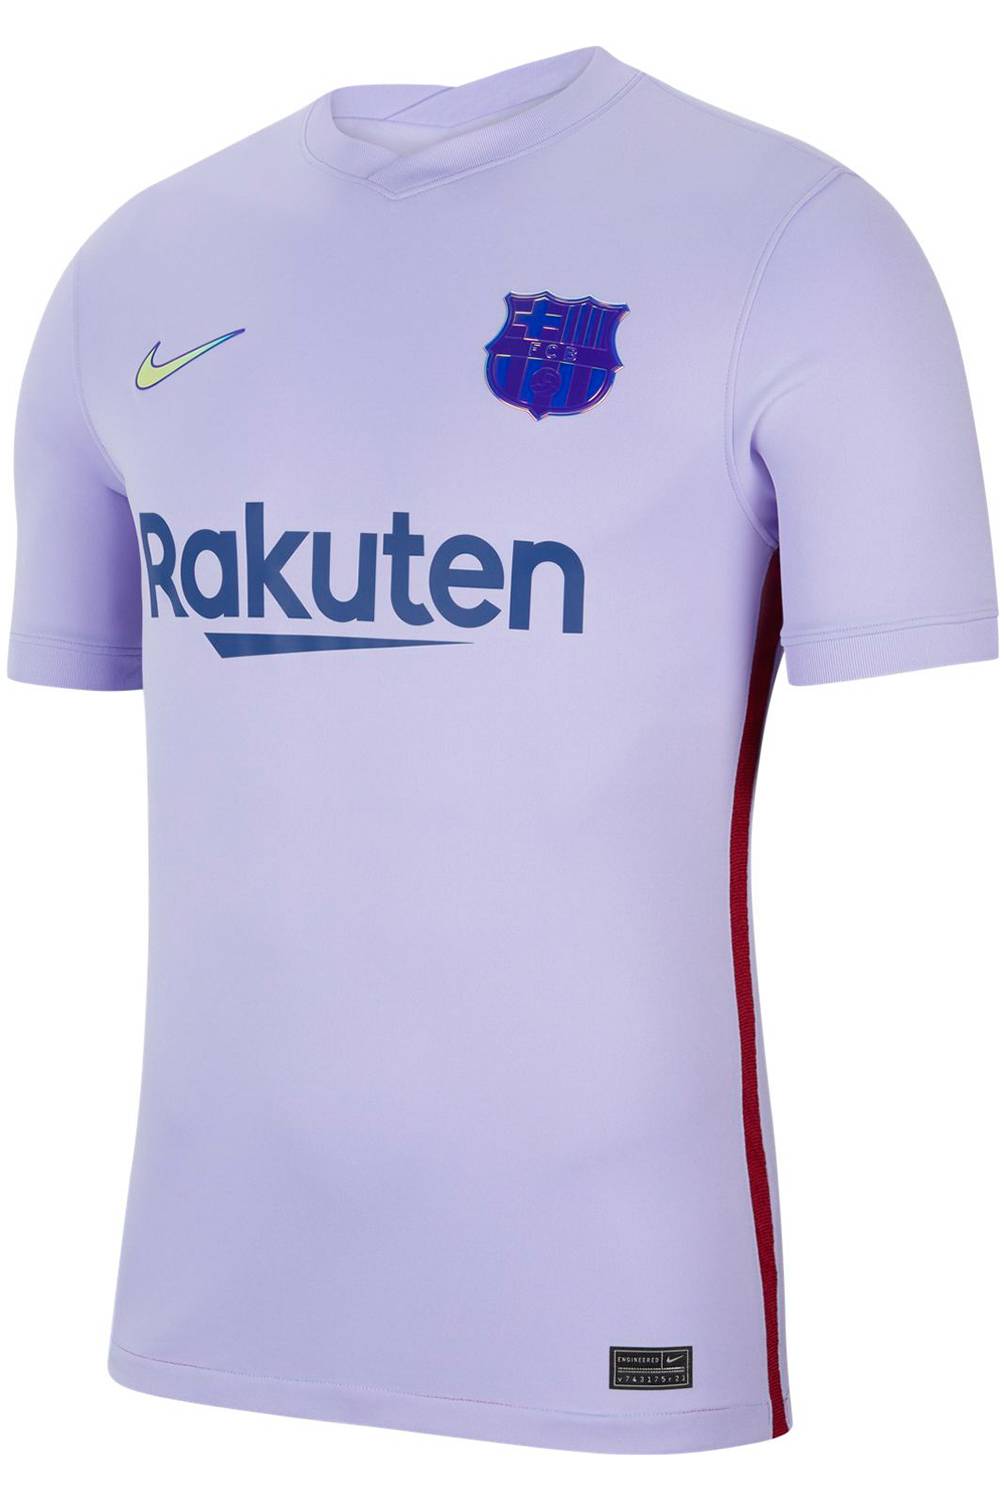 NIKE - Camiseta Fútbol Fc Barcelona Hombre